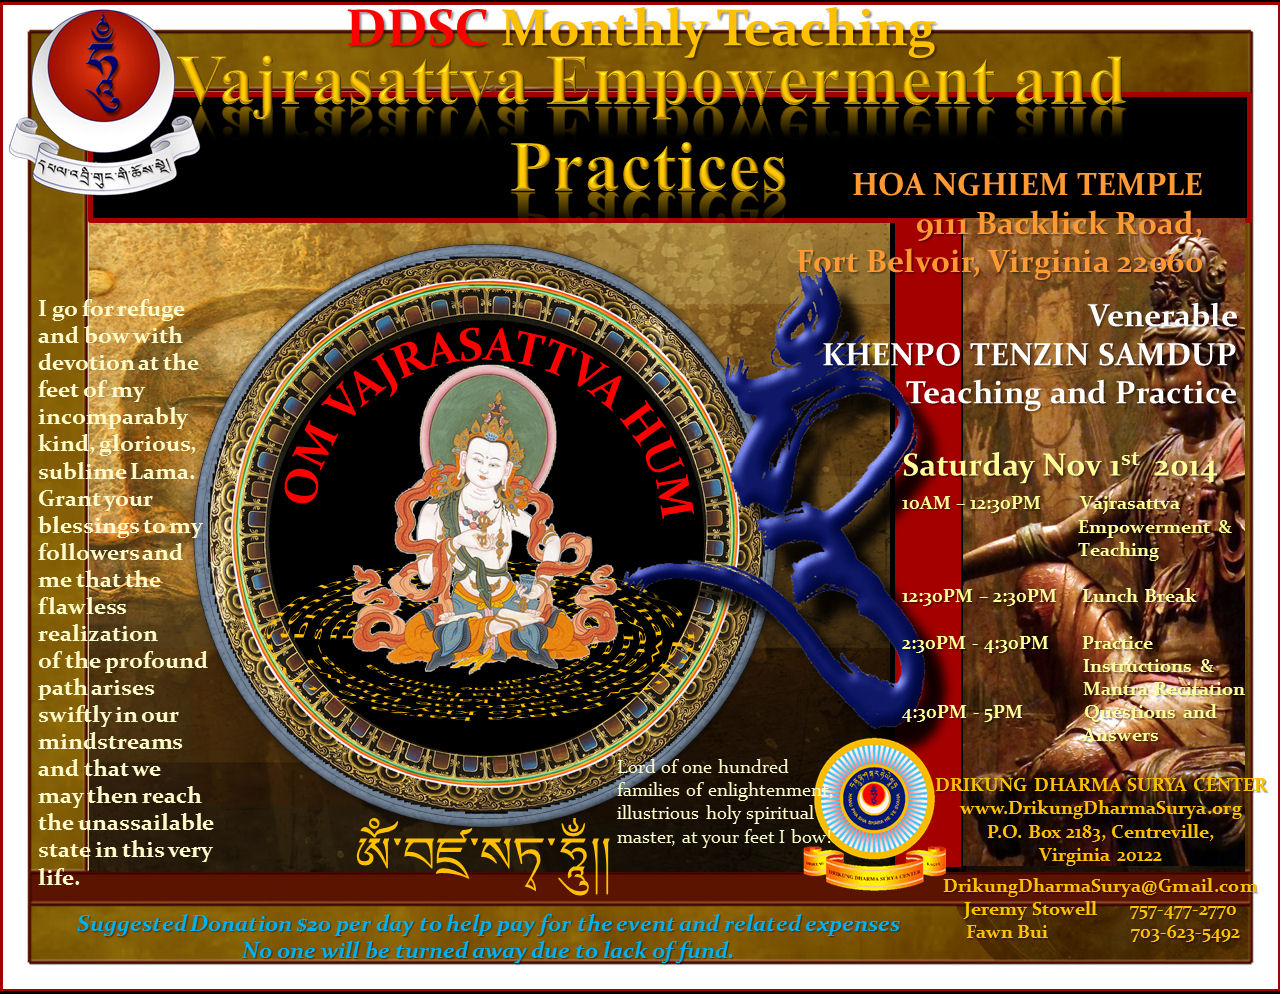 DDSC Monthly Program - Vajrasattva Empowerment and Practices, 1 Nov 2014 at Hoa Nghiem Temple